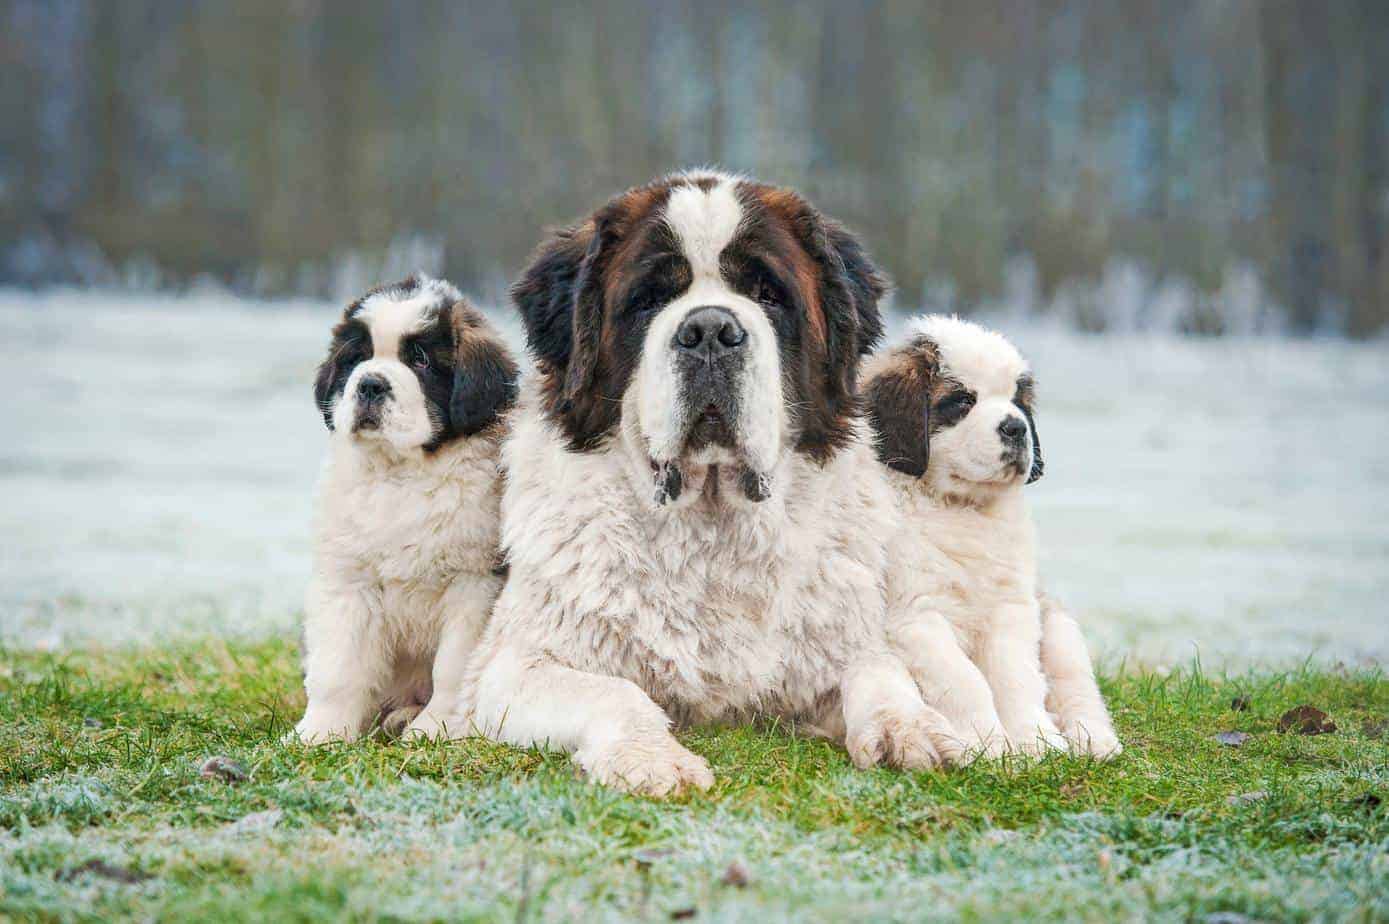  Dog breeds, Saint Bernard Dog